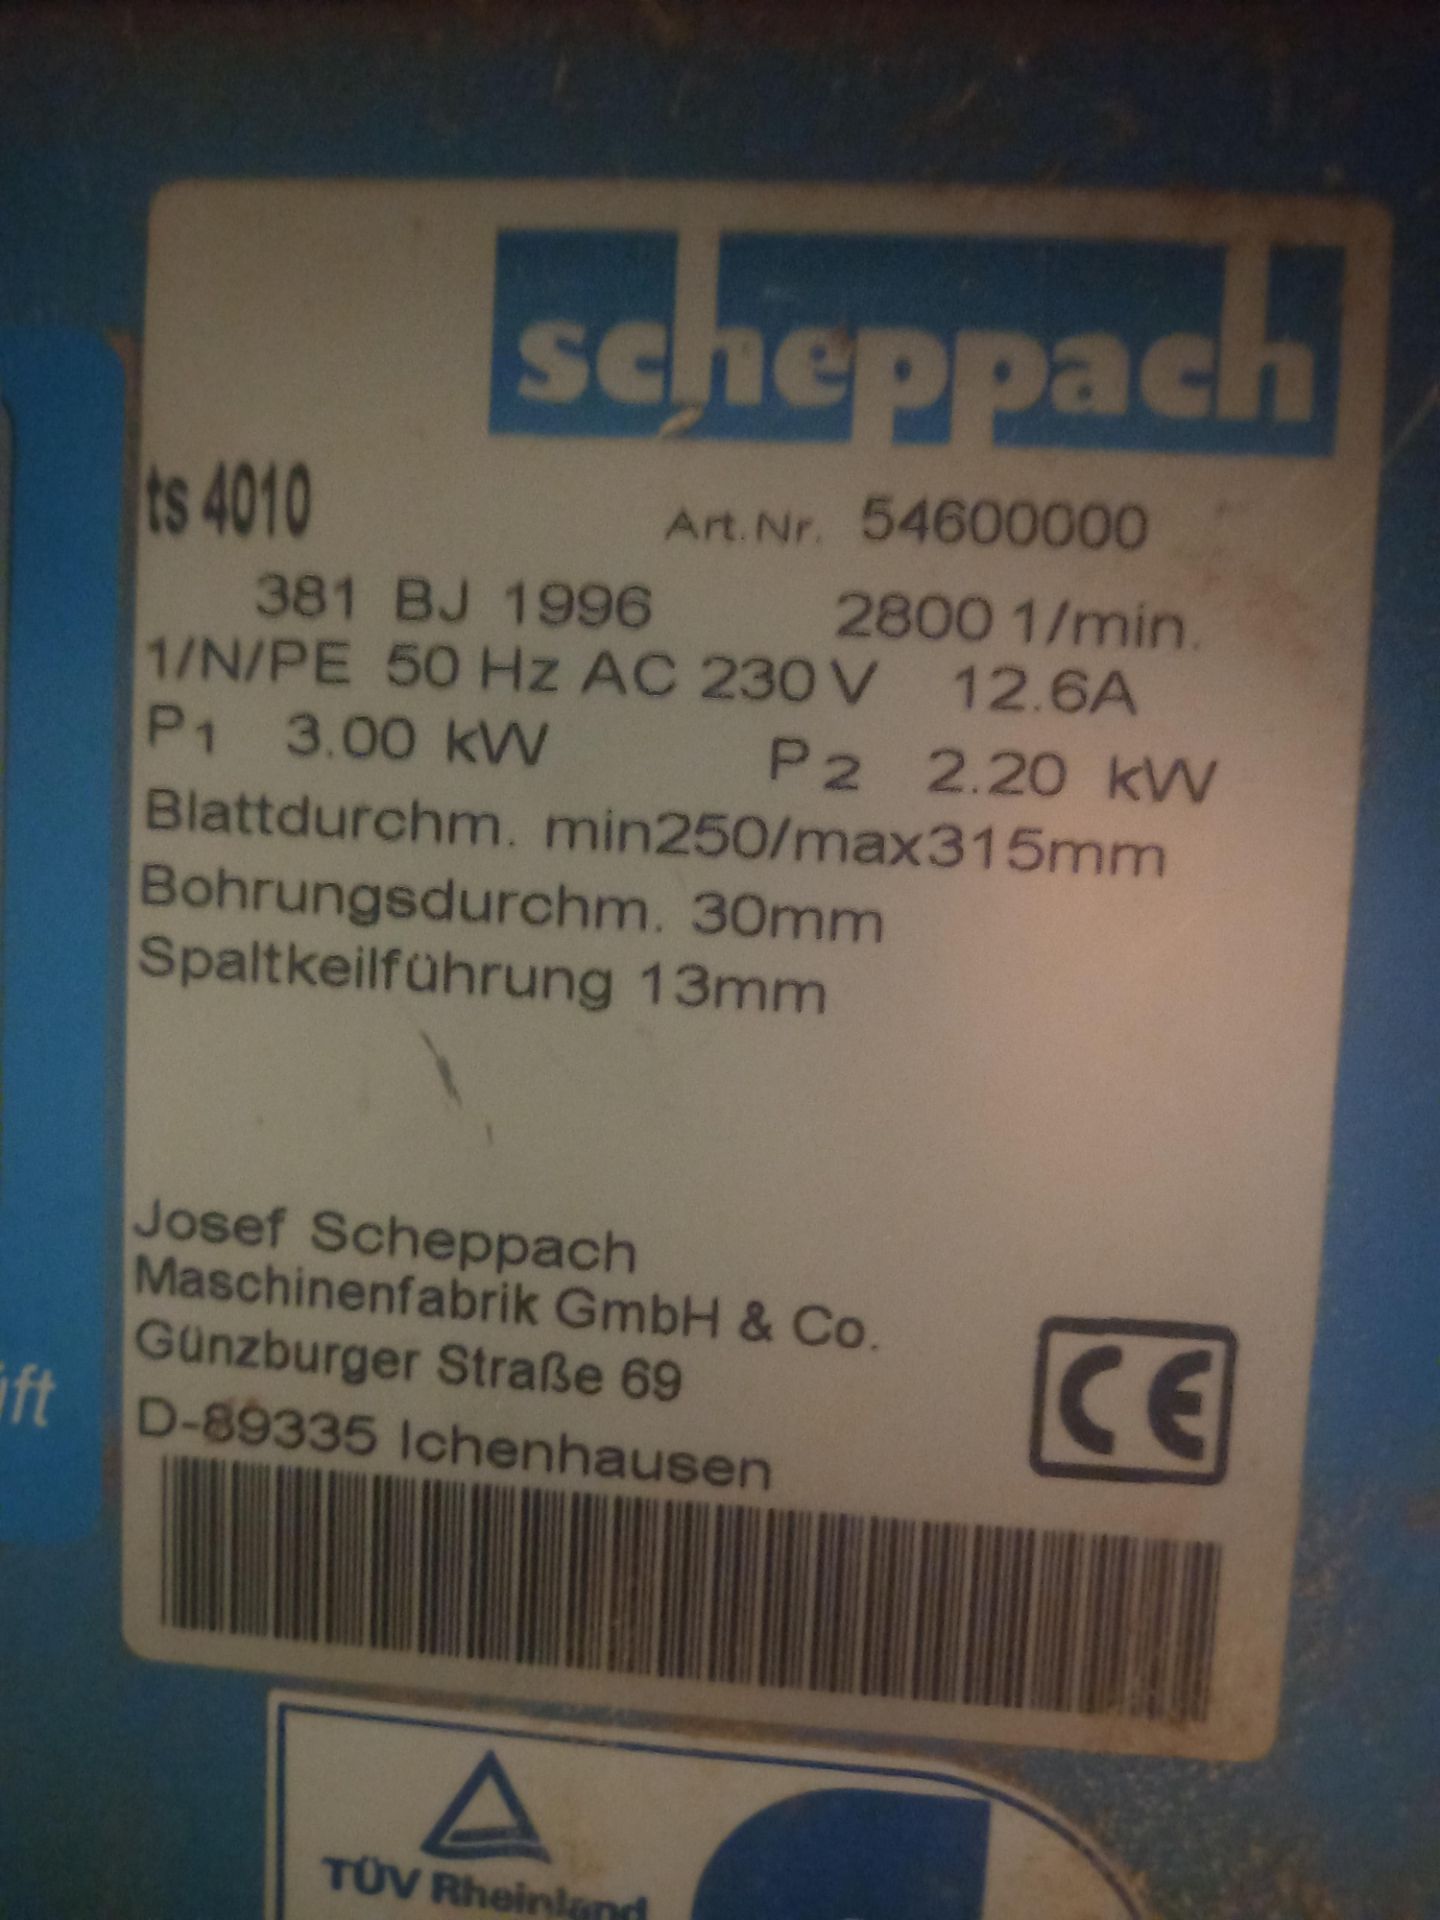 Scheppach Model TS4010 Circular Saw Bench - Image 2 of 4